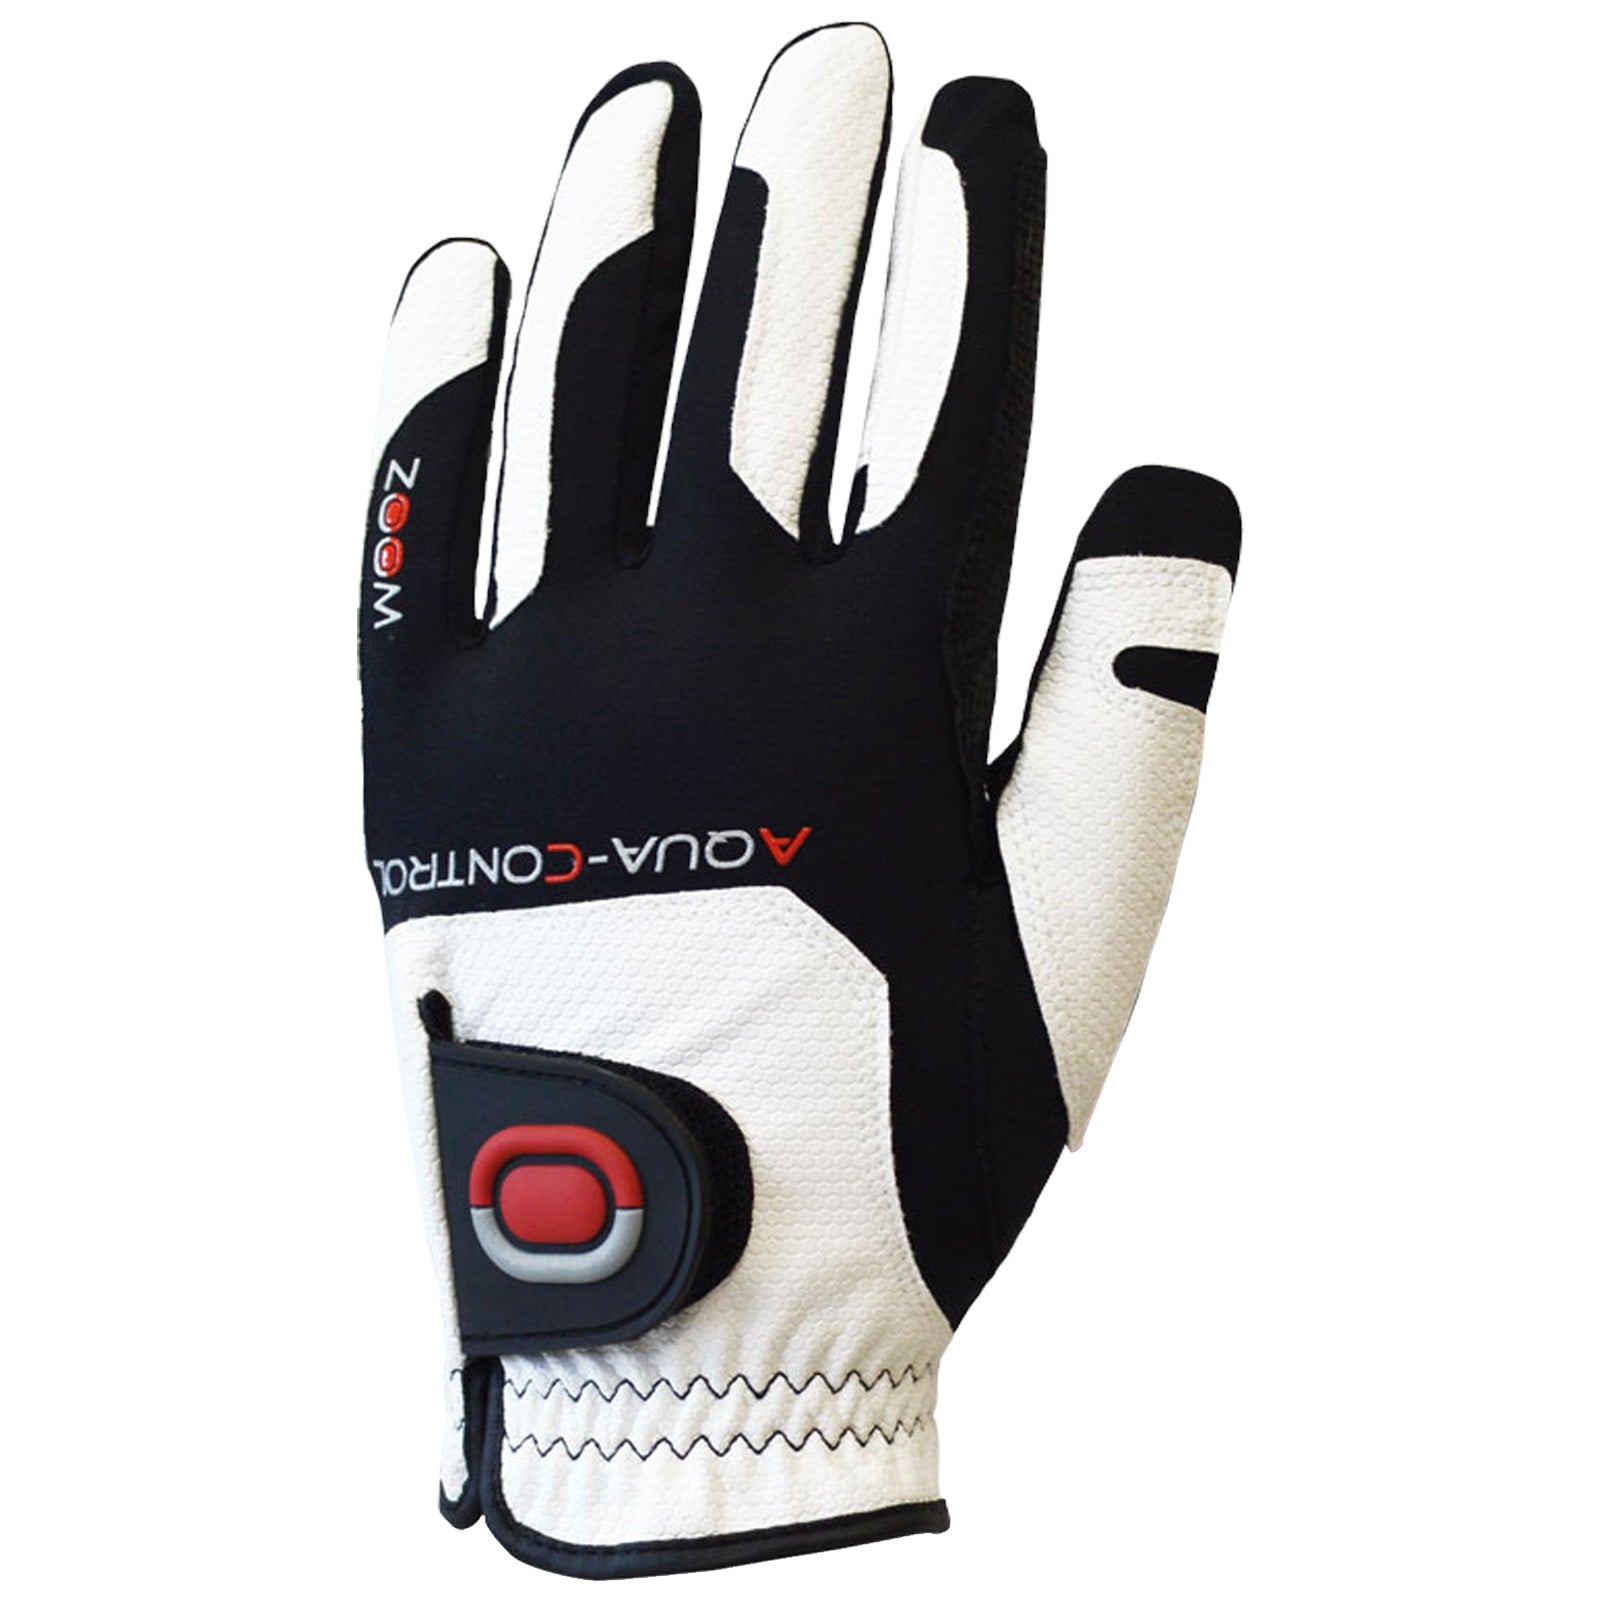 Zoom Mens Left Hand Flexx Fit AQUA CONTROL Golf Glove - One Size